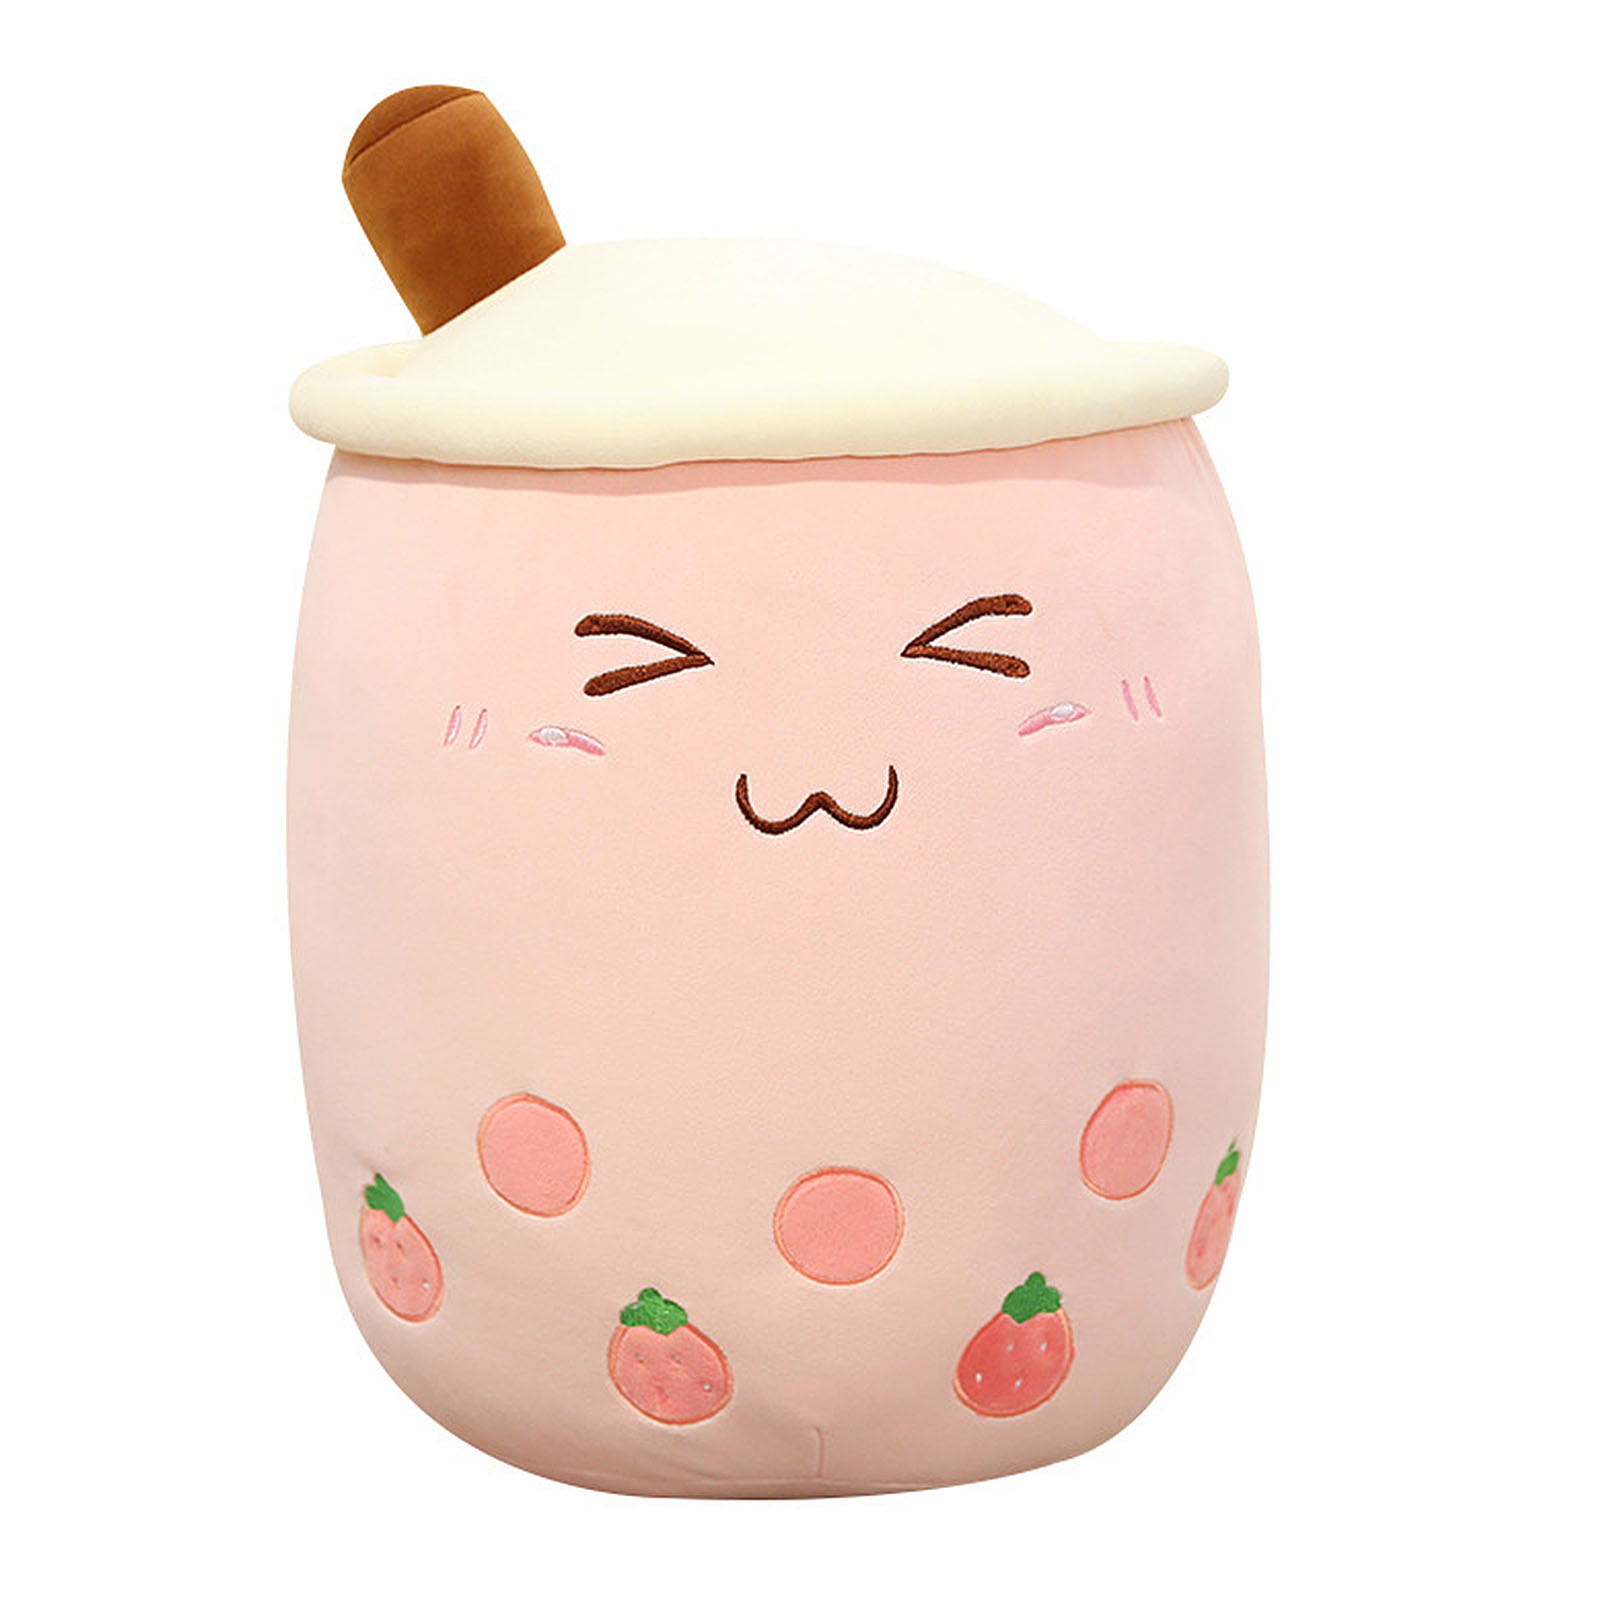 Details about   Bubble Tea Boba Cup Soft Stuffed Plush Pillow Cushion Kawaii Cute Brown White